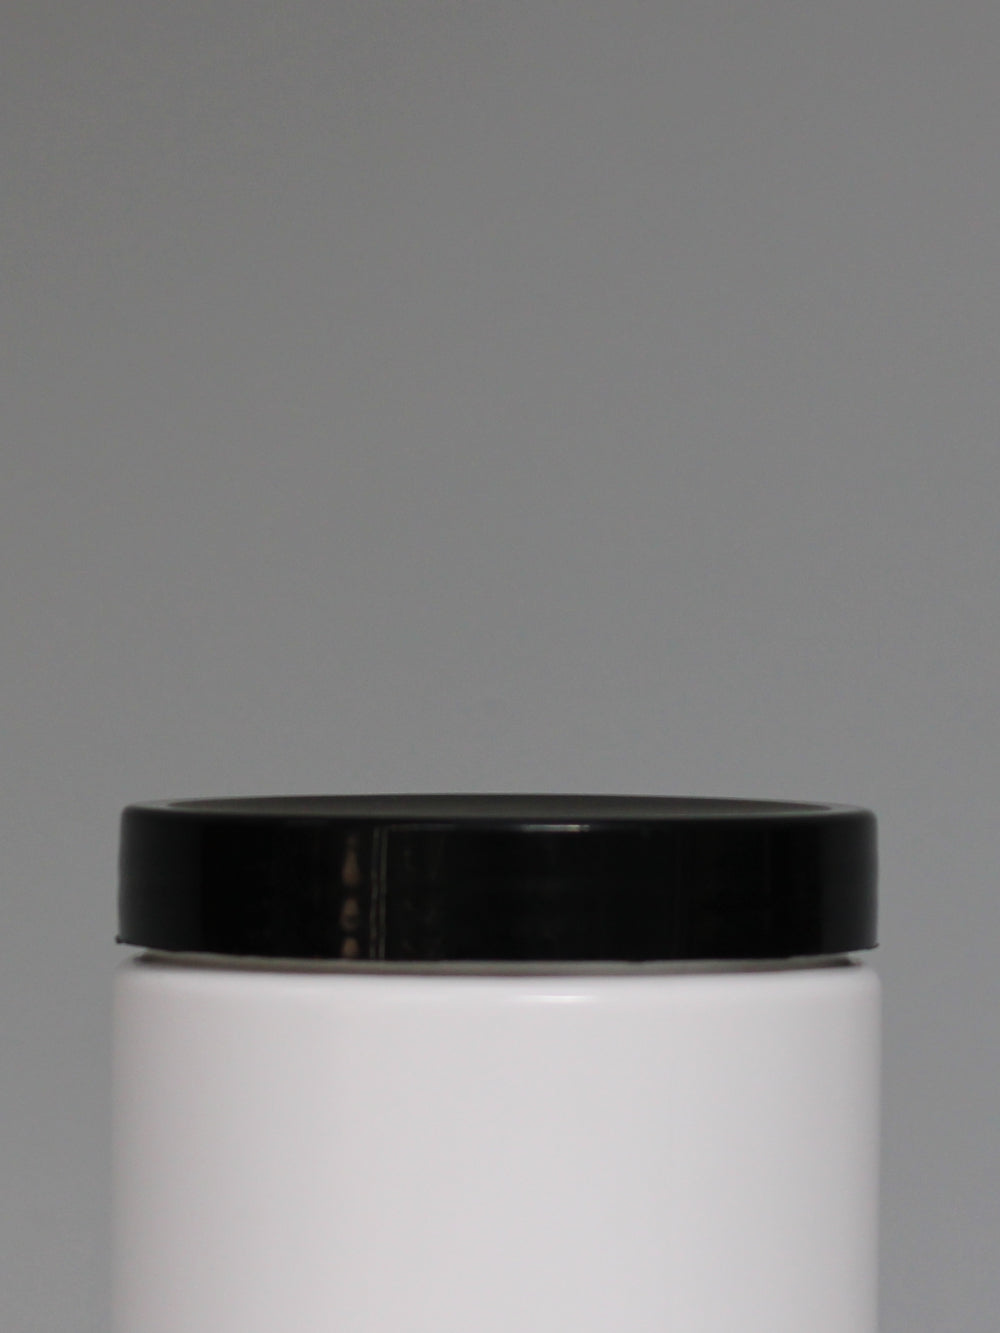 250ml Straight HDPE Jar - (Pack of 100 units)